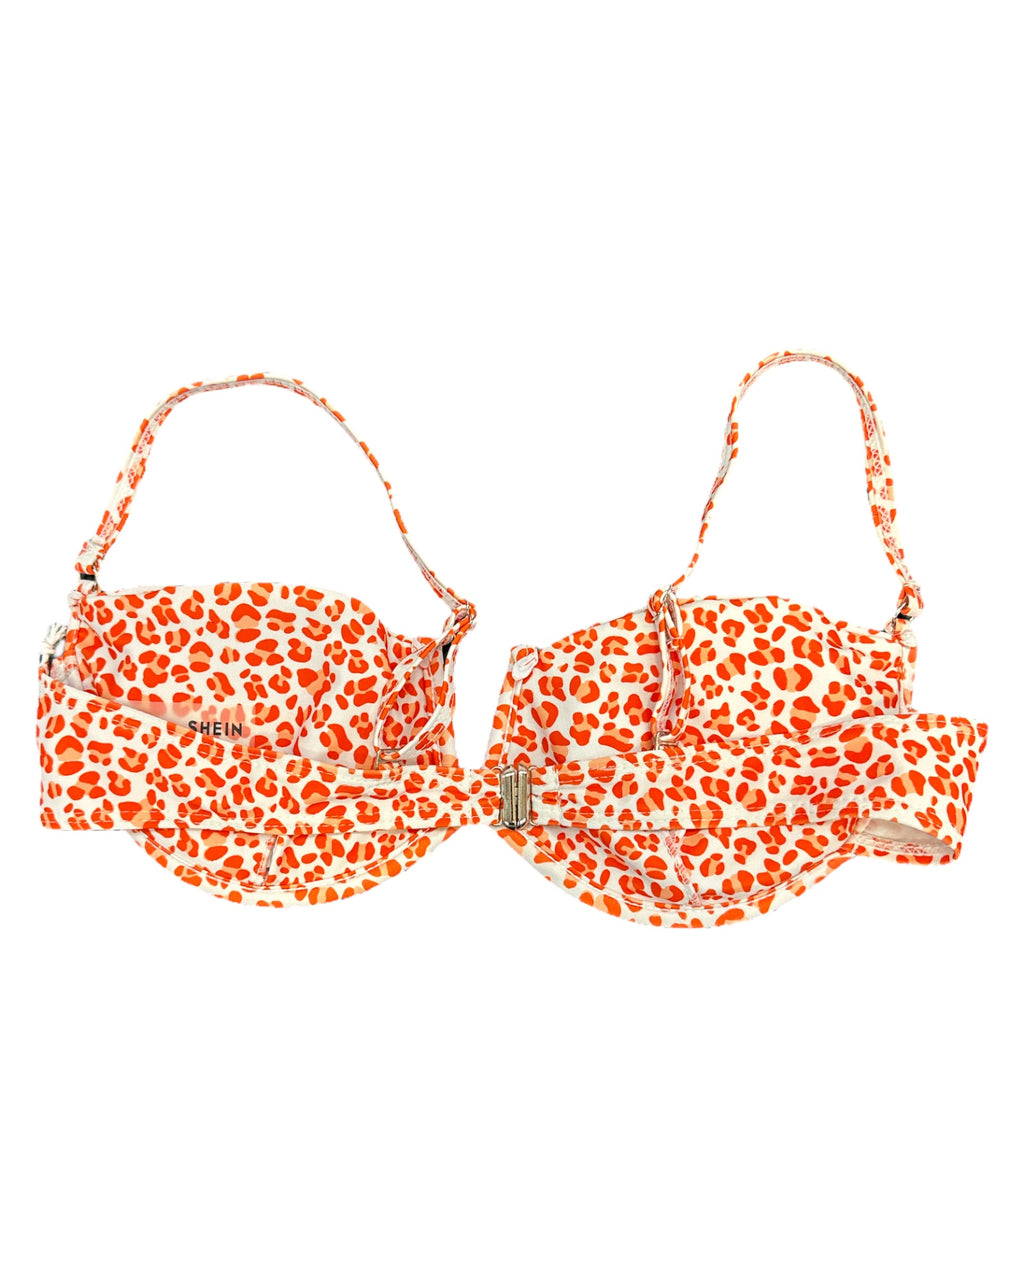 Orange Animal Print Shein Swim Top, M